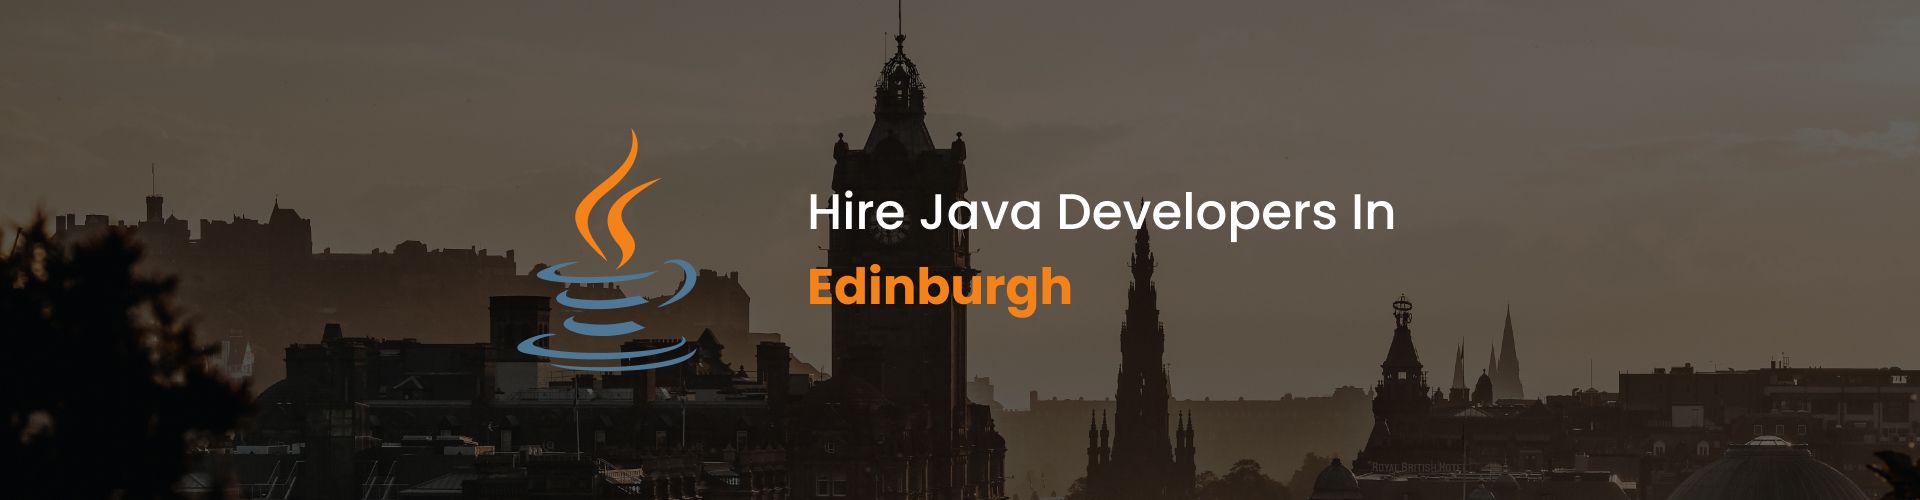 hire java developers in edinburgh